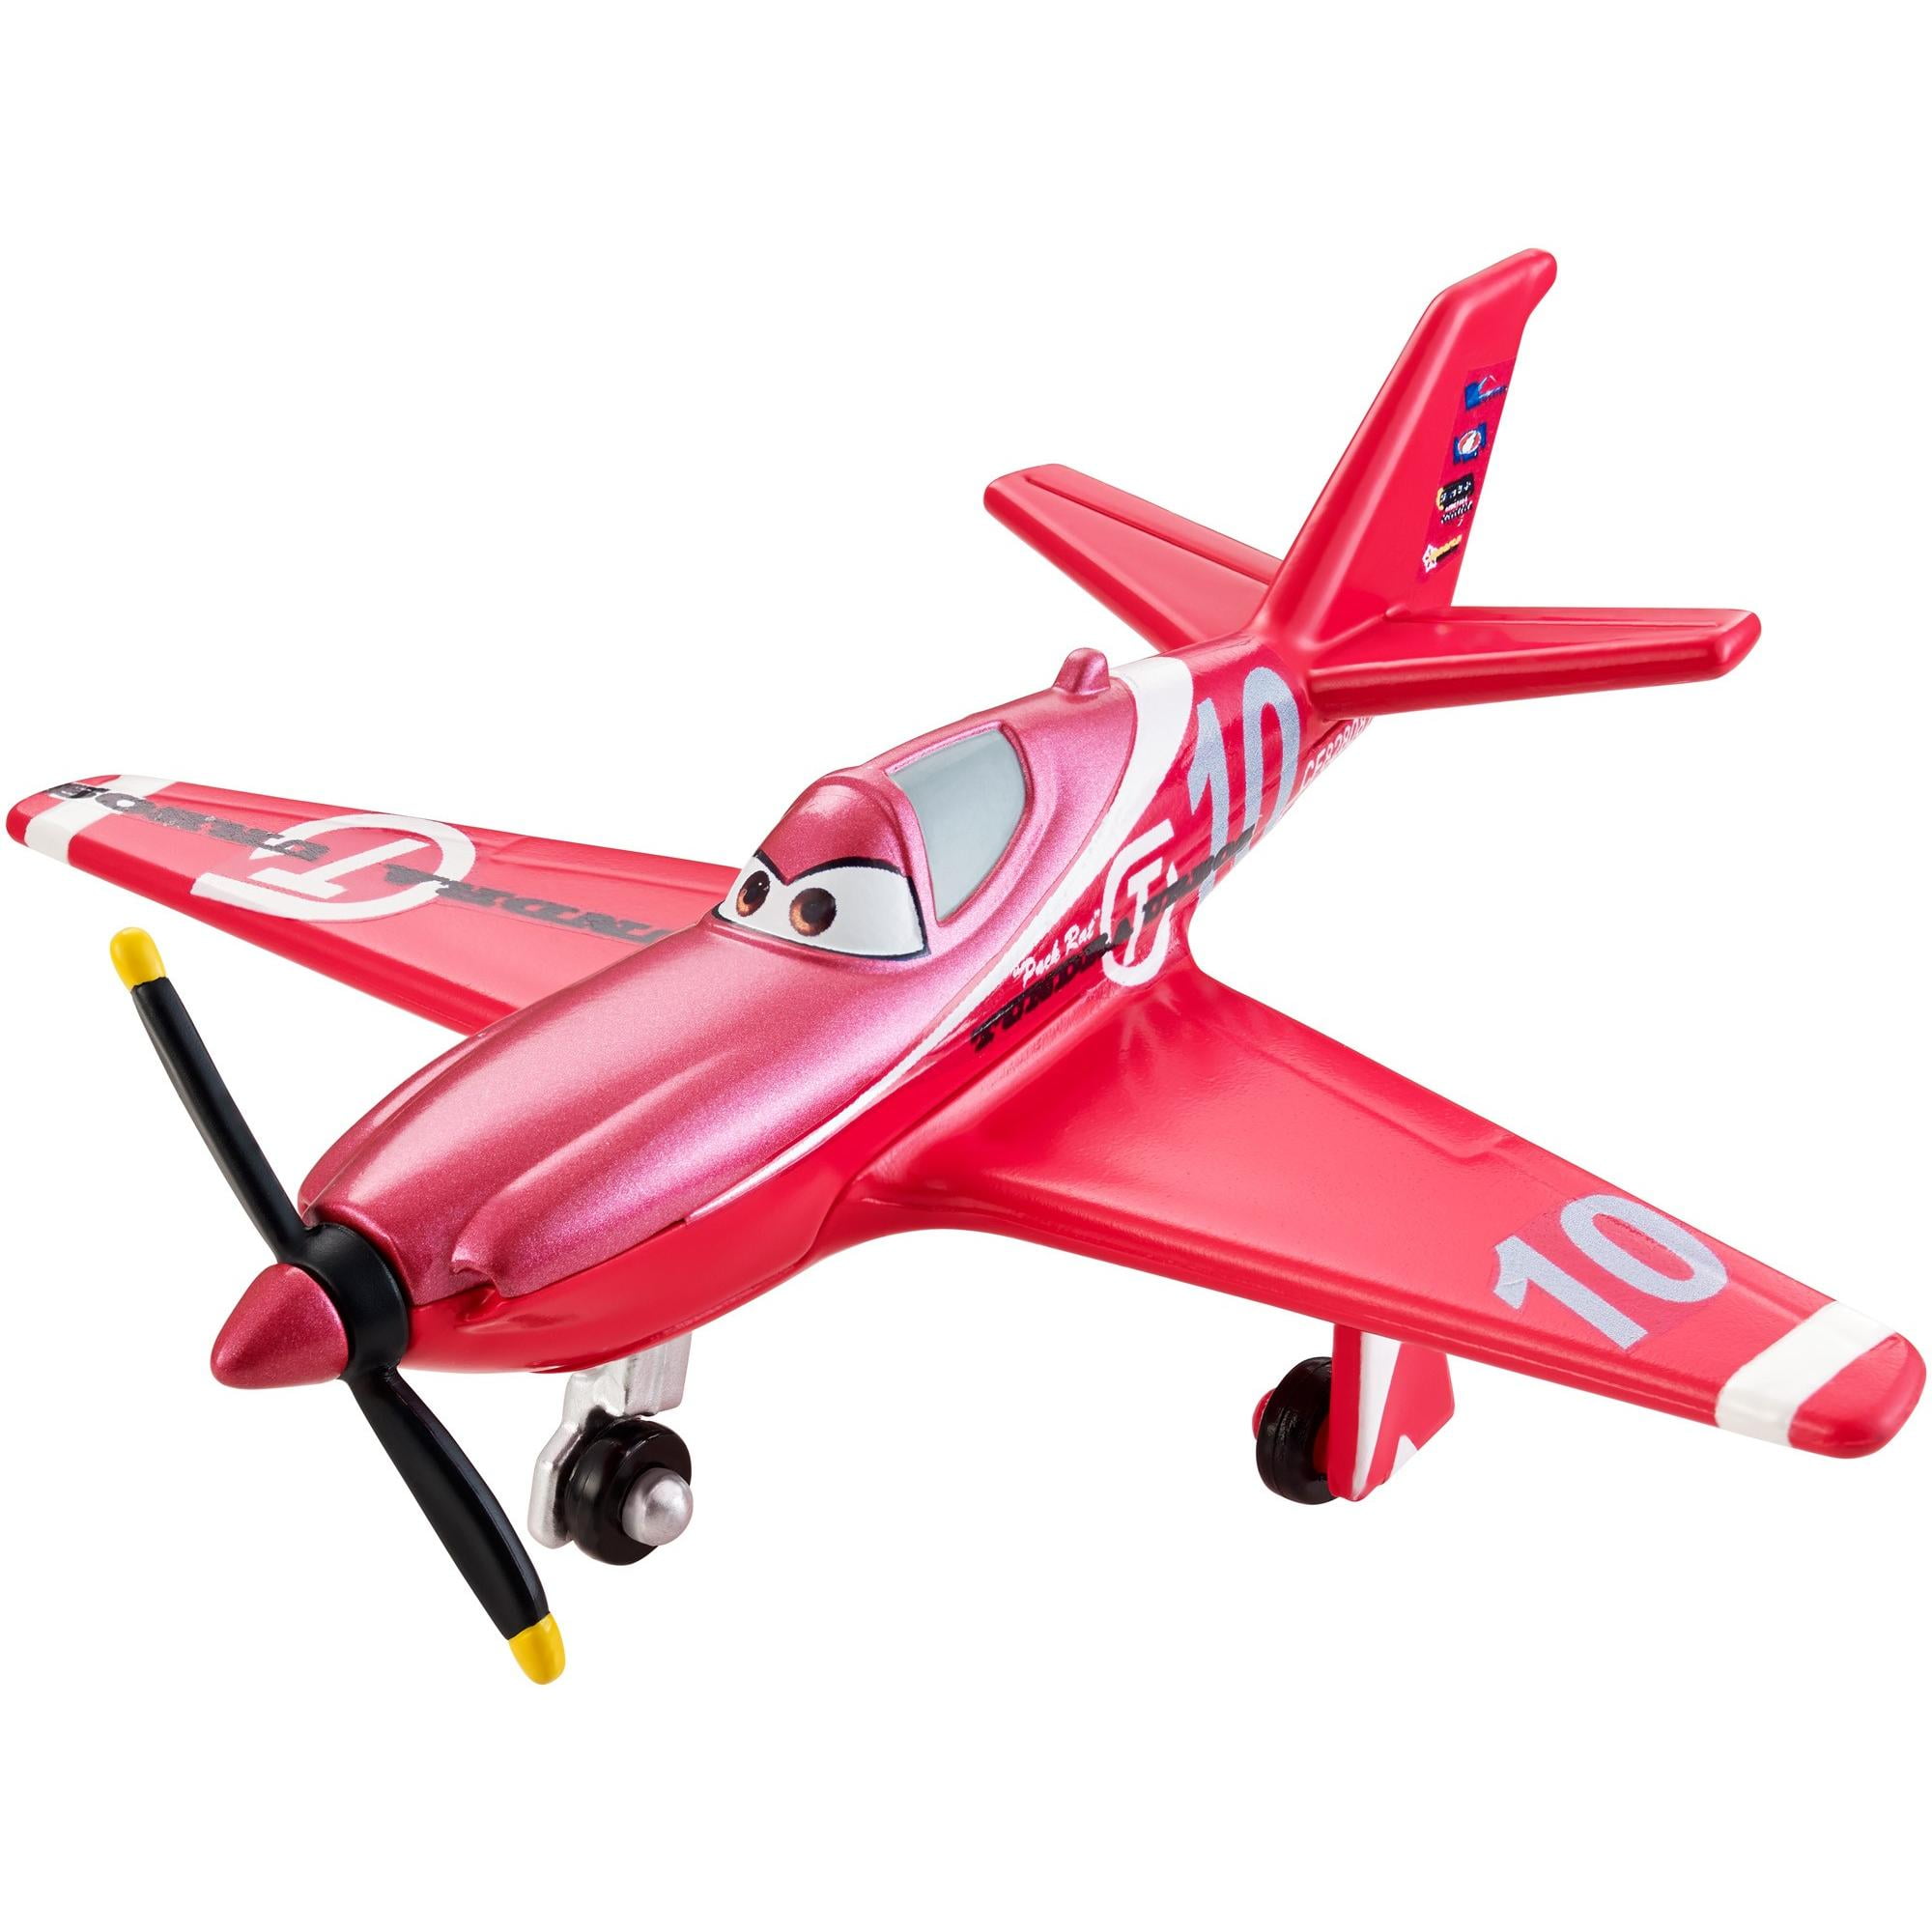 disney-pixar-planes-movie-pack-rat-10-2014-mattel-toy-aircraft